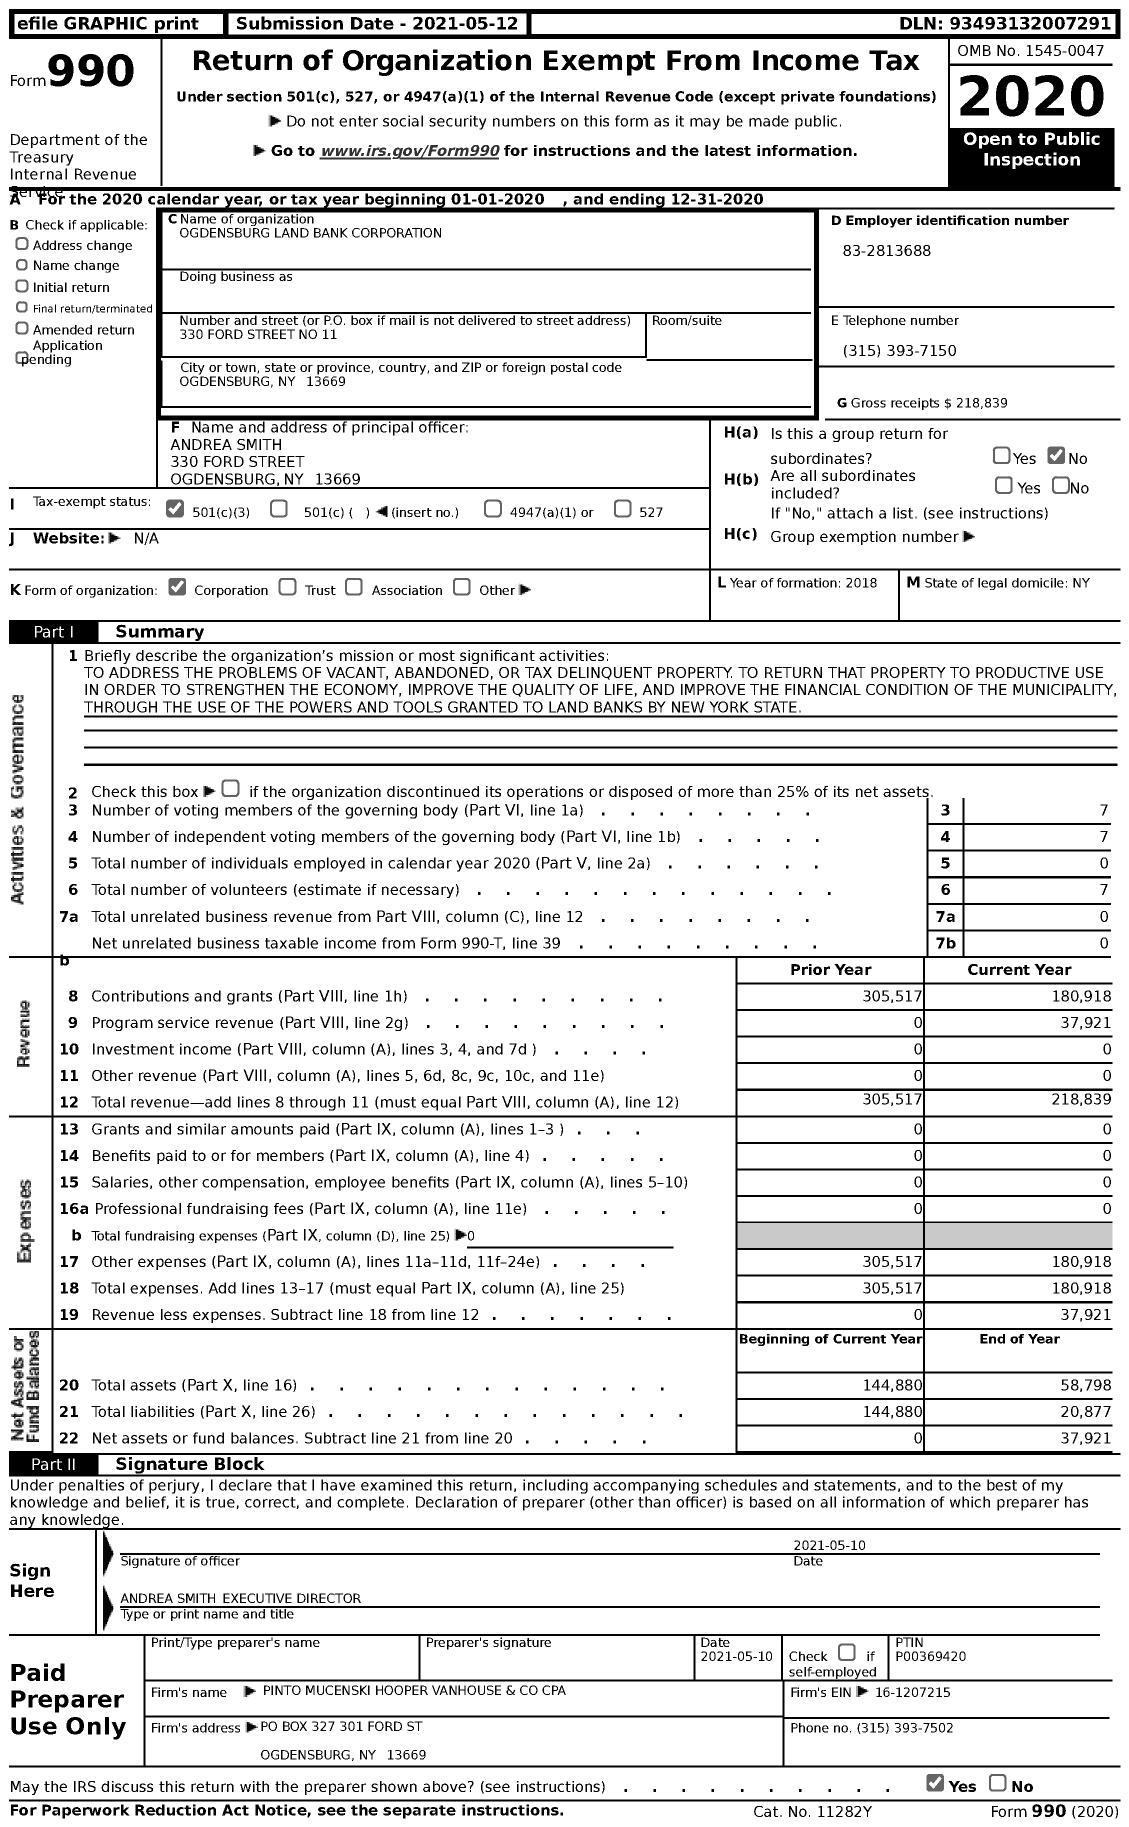 Image of first page of 2020 Form 990 for Ogdensburg Land Bank Corporation